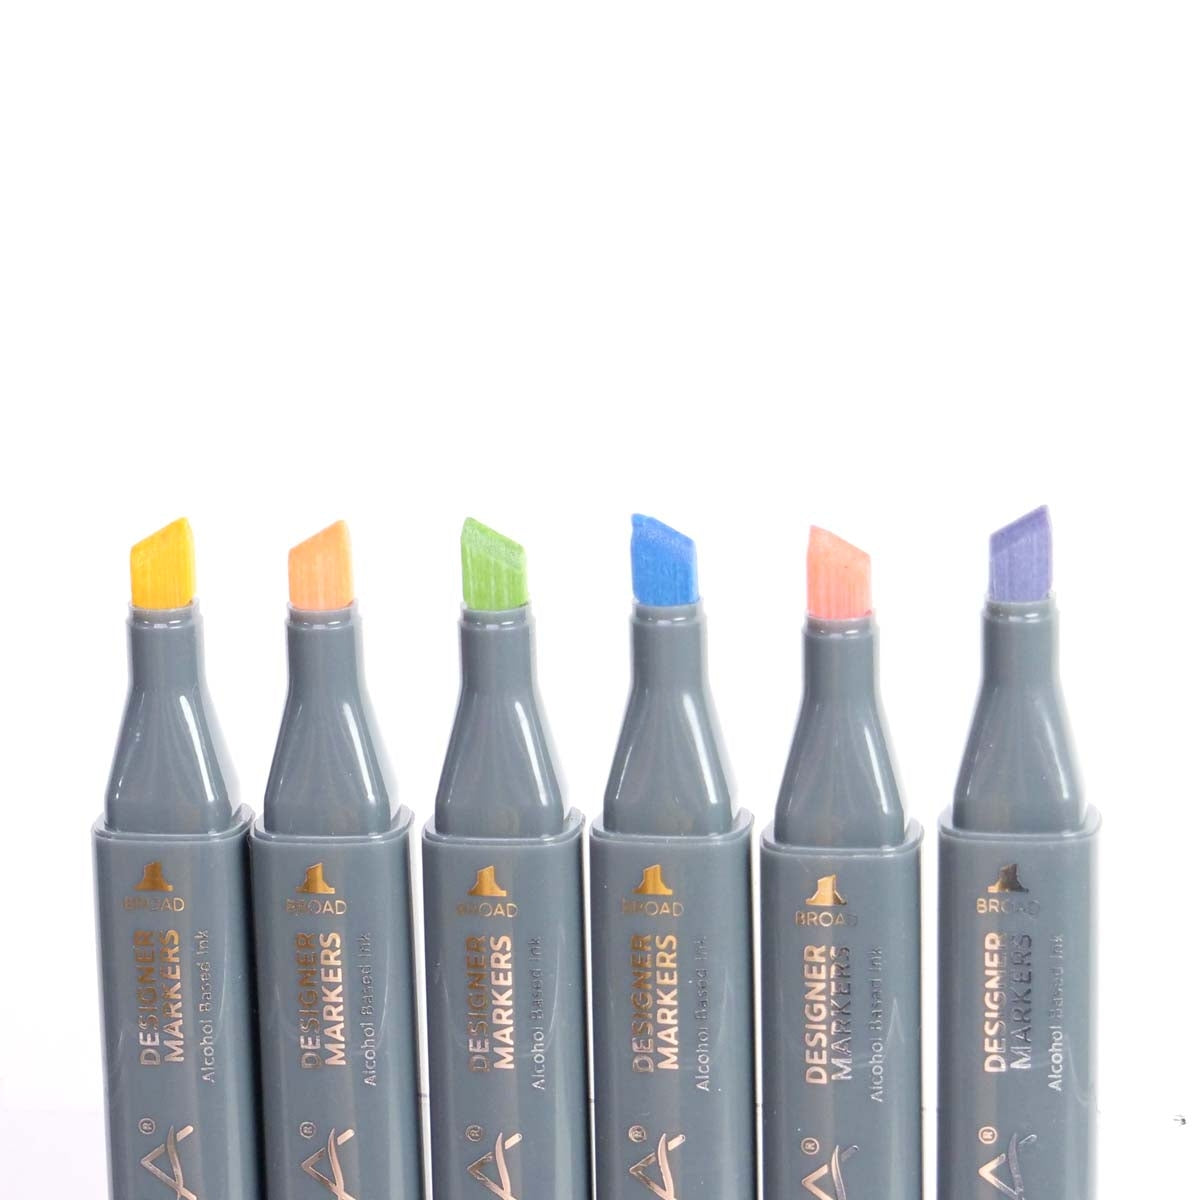 NOVA - Designer Markers - Dubbele tip - Basis op basis van alcohol - 6 Pack - Pastels